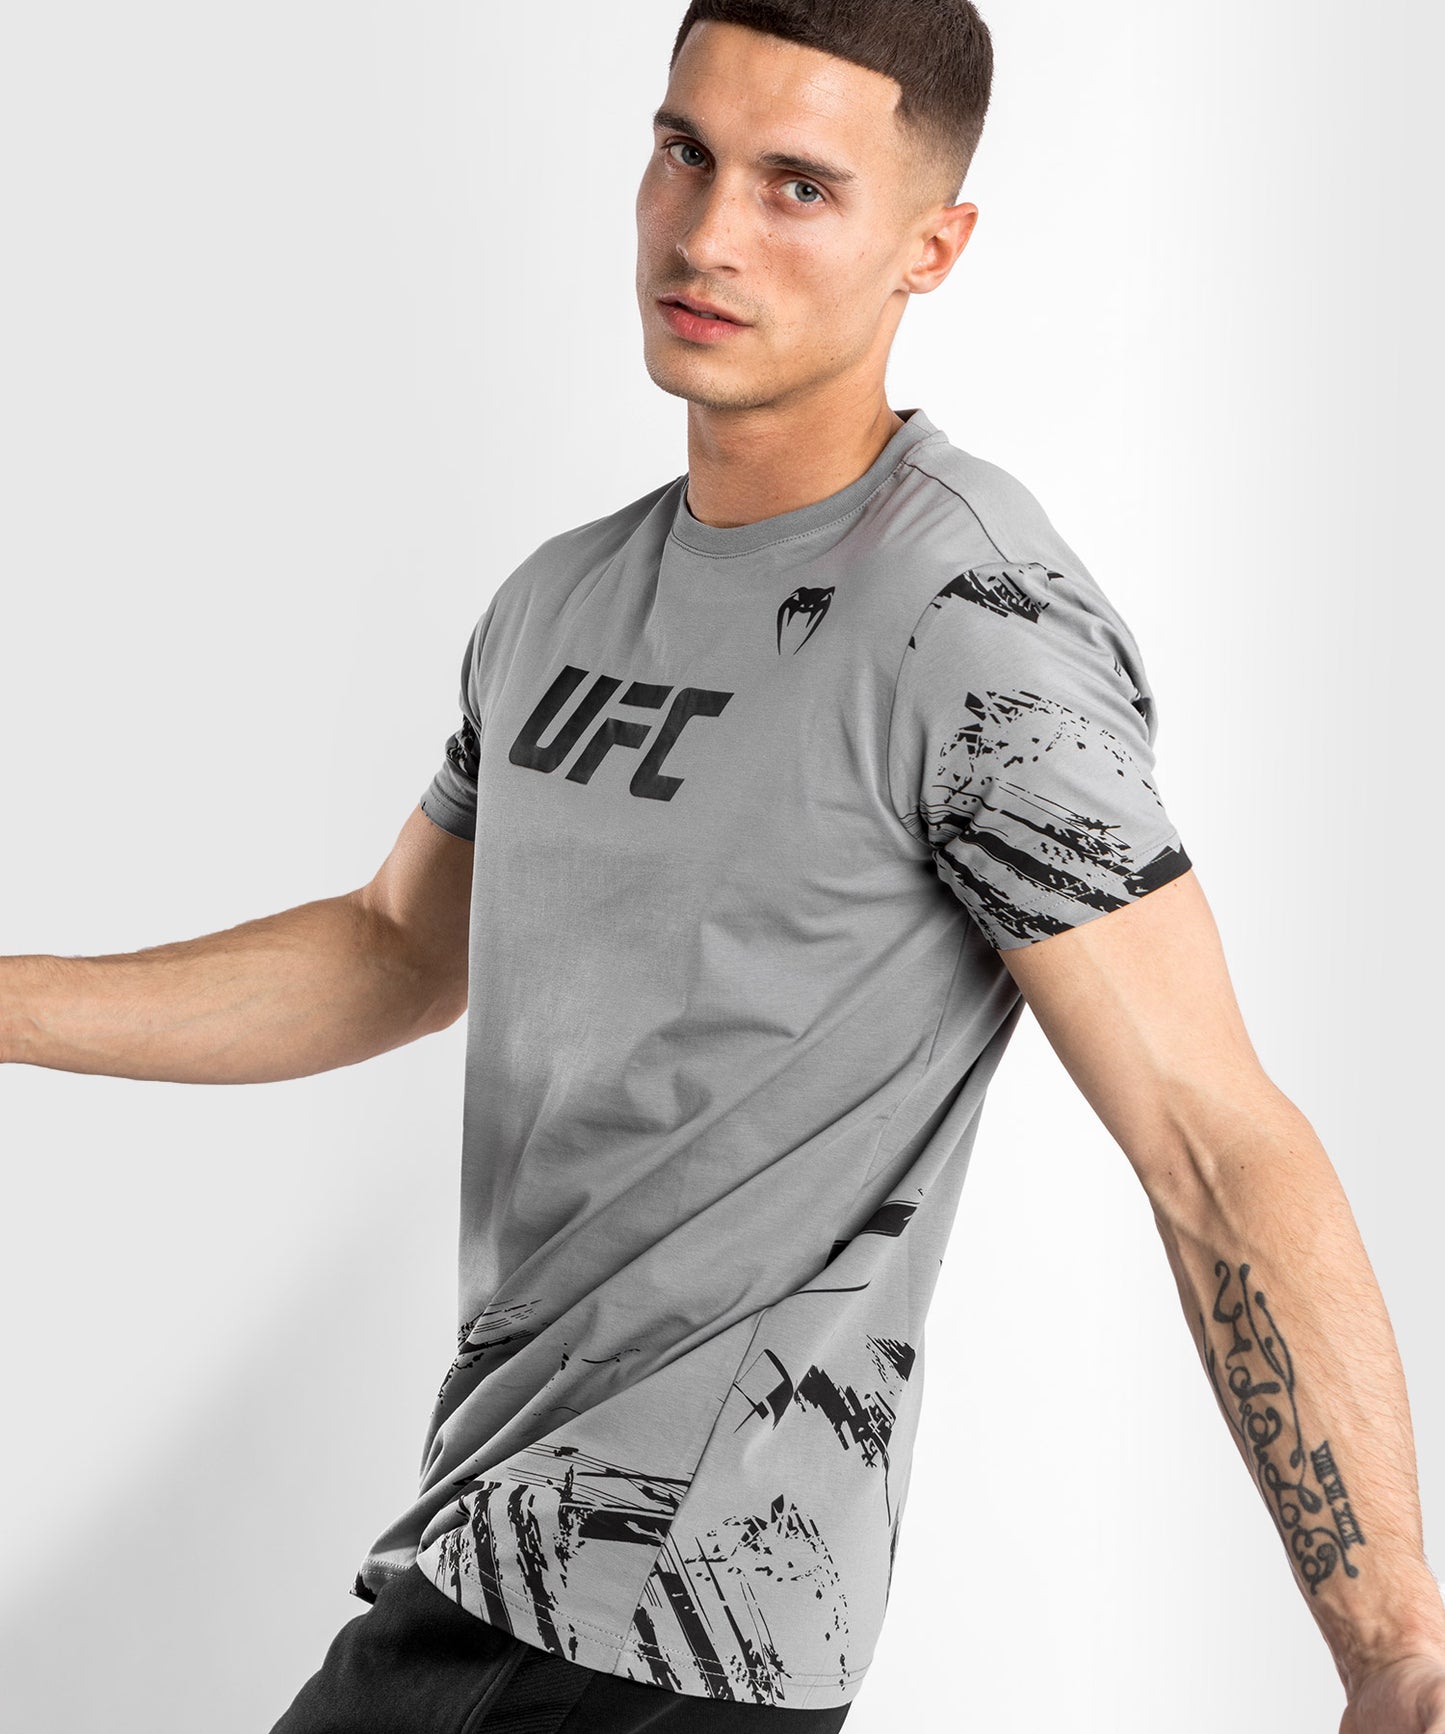 UFC Venum Authentic Fight Week 2.0 Men’s Short Sleeve T-Shirt - Grey